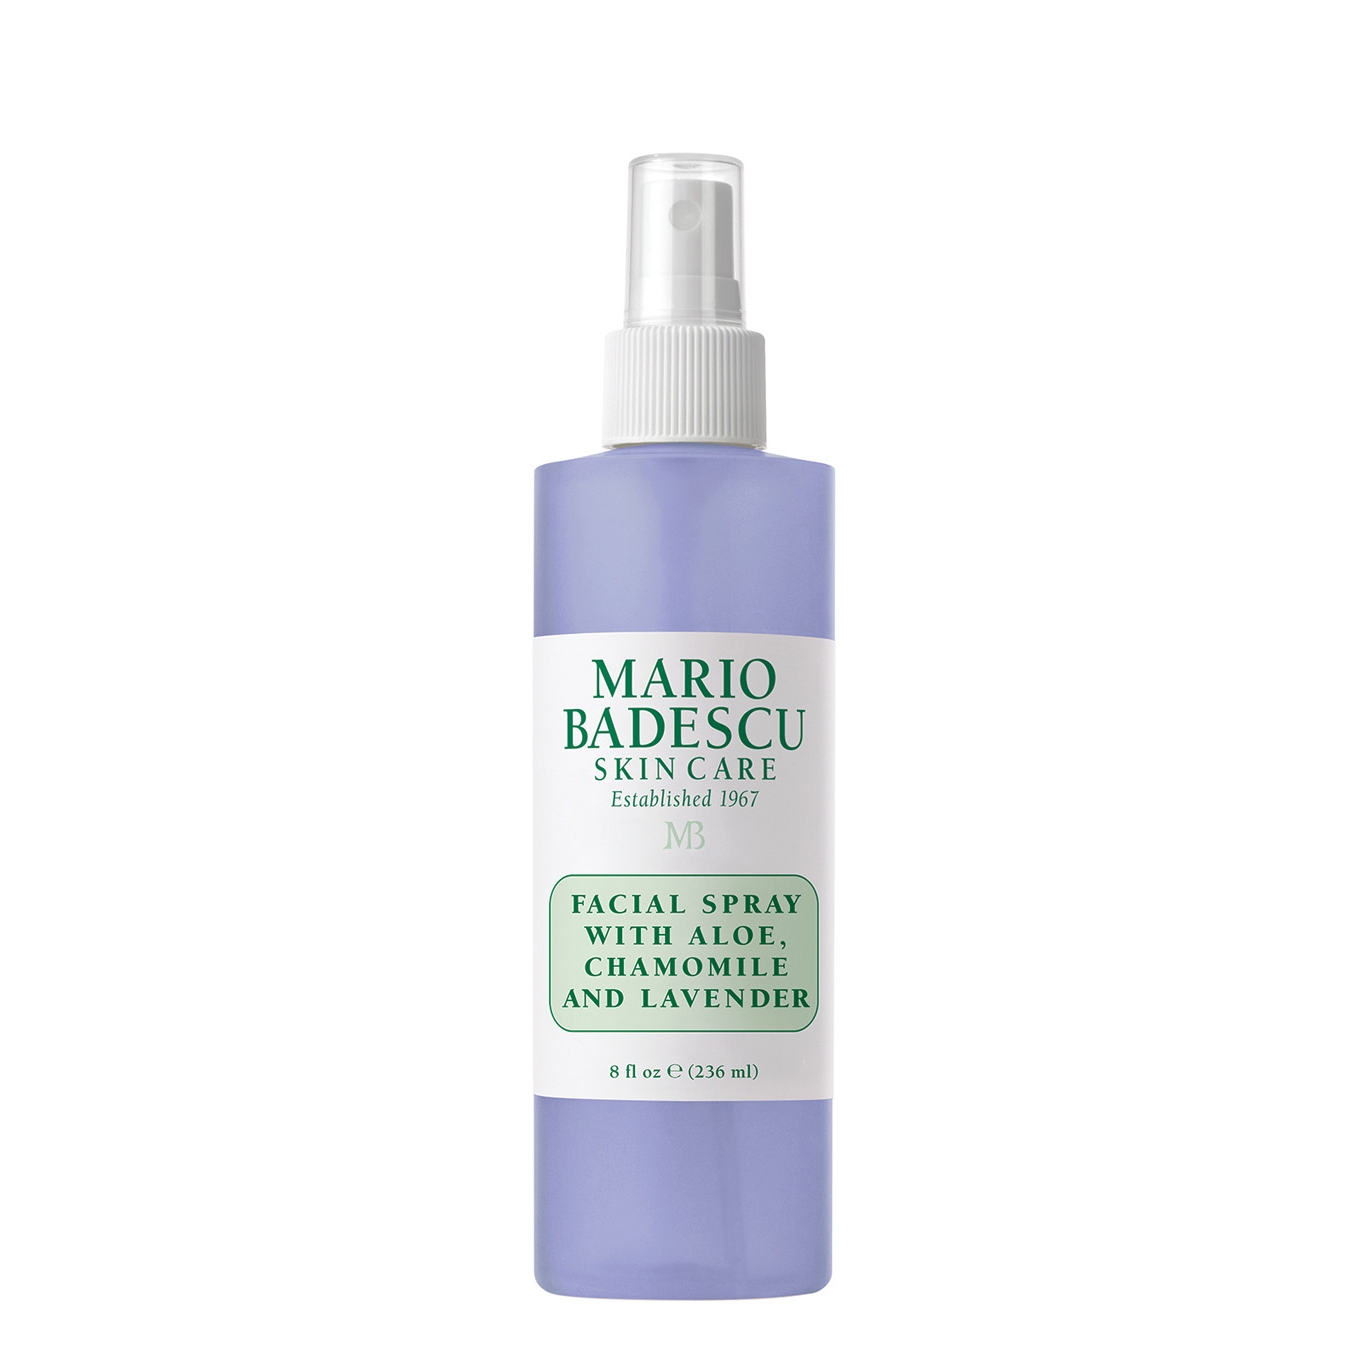 Mario Badescu Facial Spray With Aloe, Chamomile And Lavender 236ml